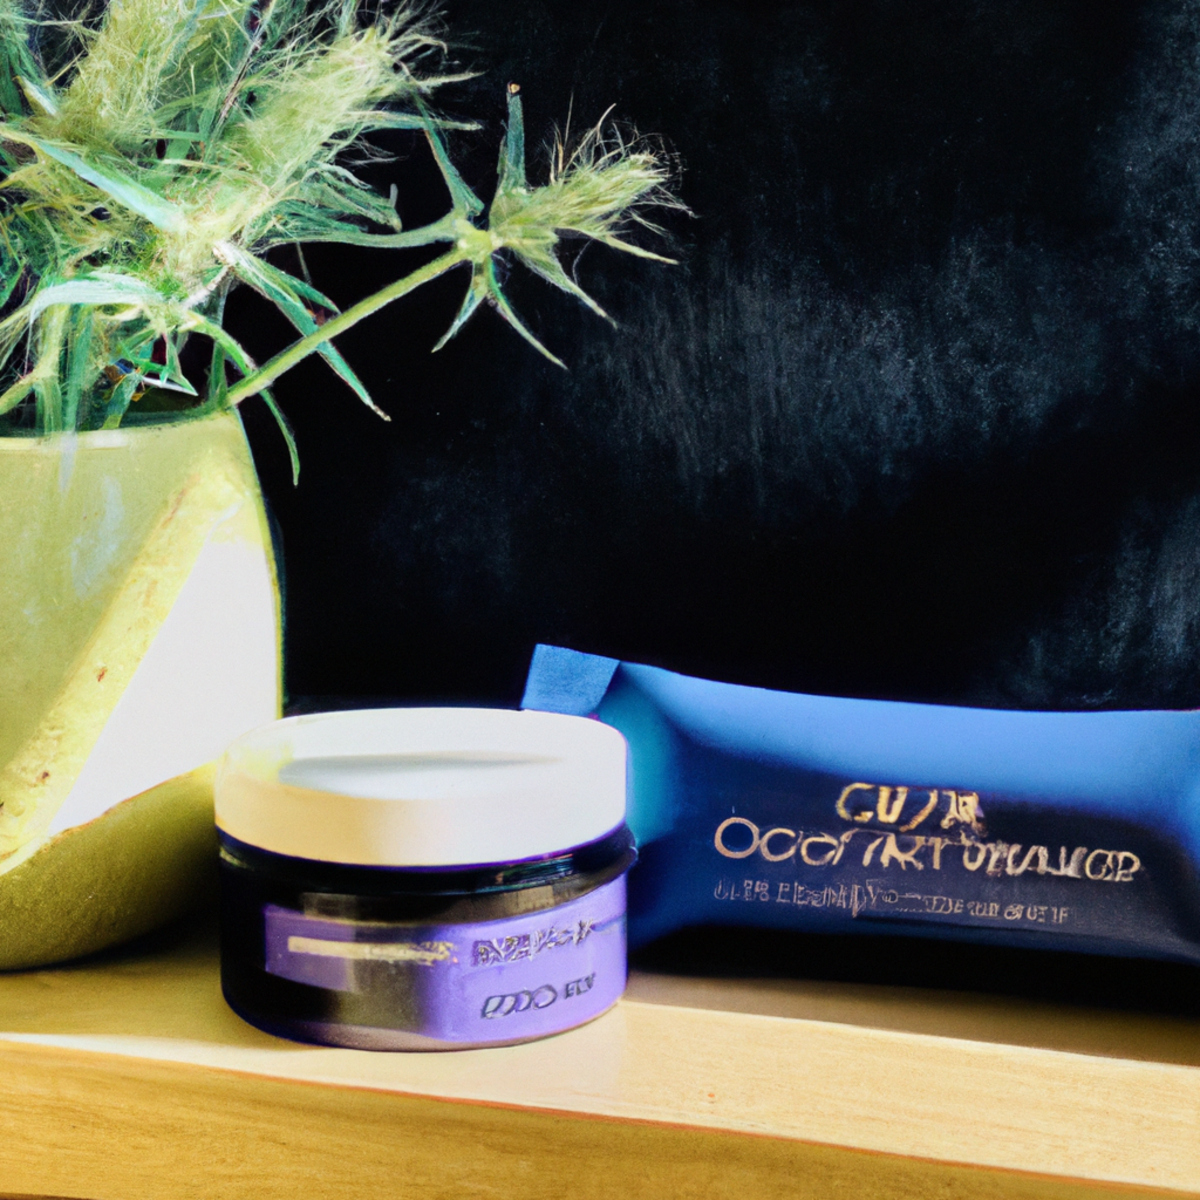 CBD-infused skincare: Luxurious face cream, lavender sprig, plush towel, warm light. Meticulously captured details entice exploration.